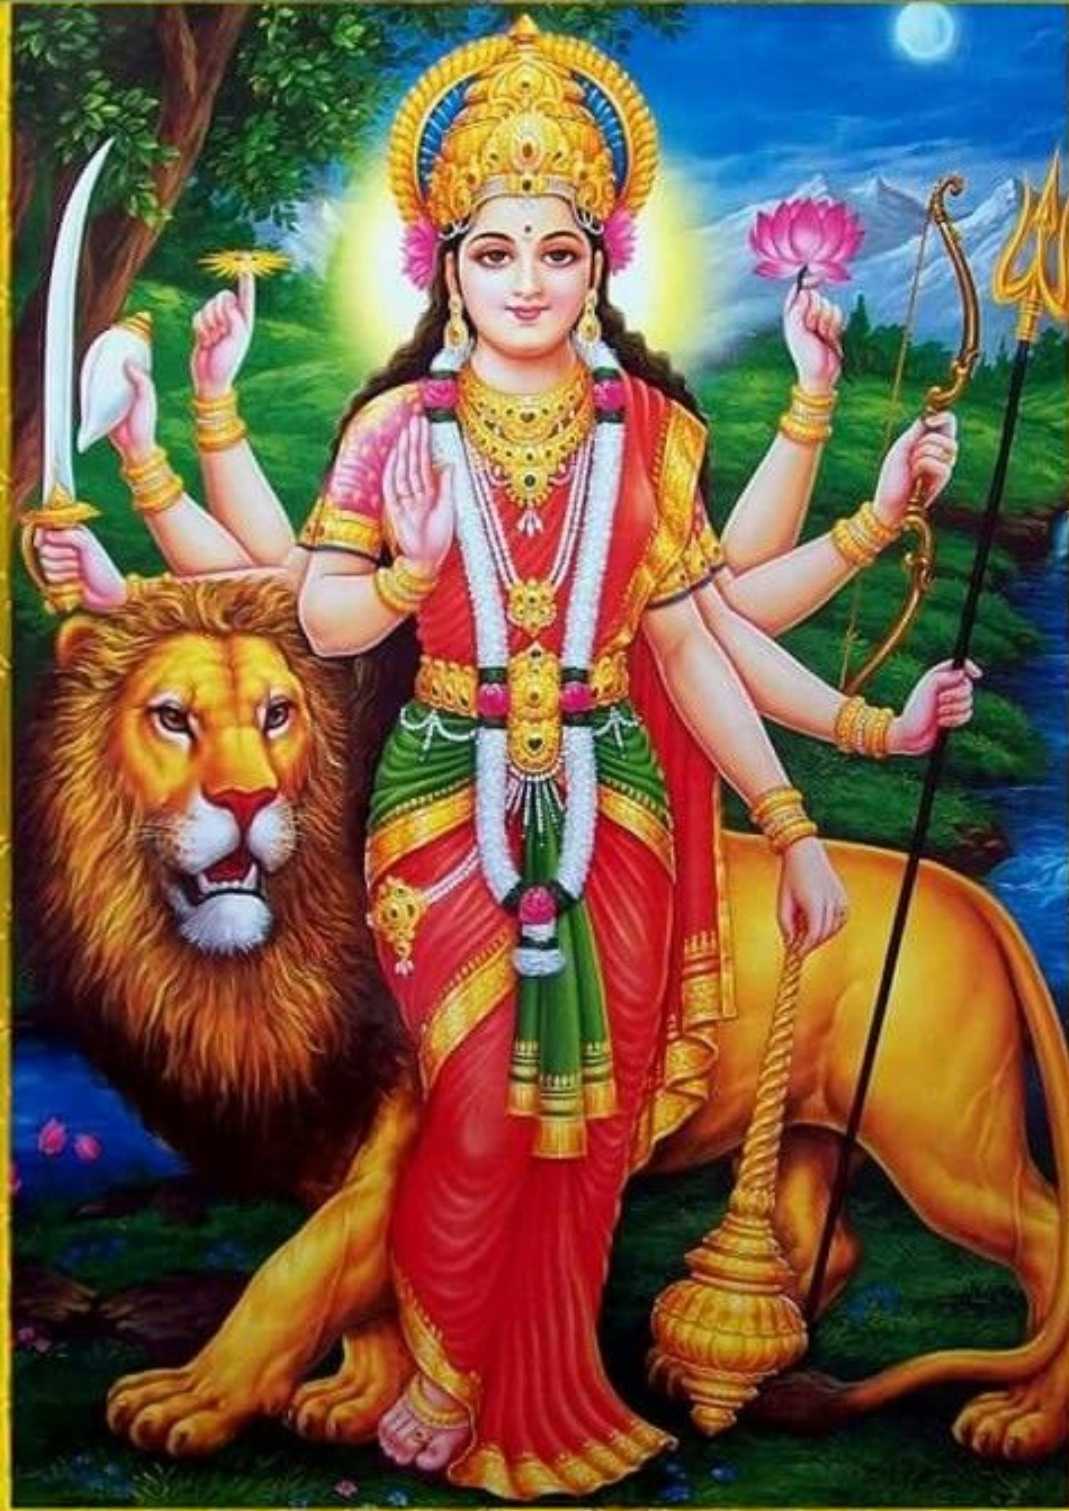 Maa Durga Ambe Mata Images for Navratri - Goddess Maa Durga Ambe Mata Navratri Images for bhakts. Durga Mata Hindu Top Goddess picture for whatsapp. Download free Durga Maiya Ji ki picture for Indian Goddess Durga Mata. Jaj maa ambe, jai maa shakti